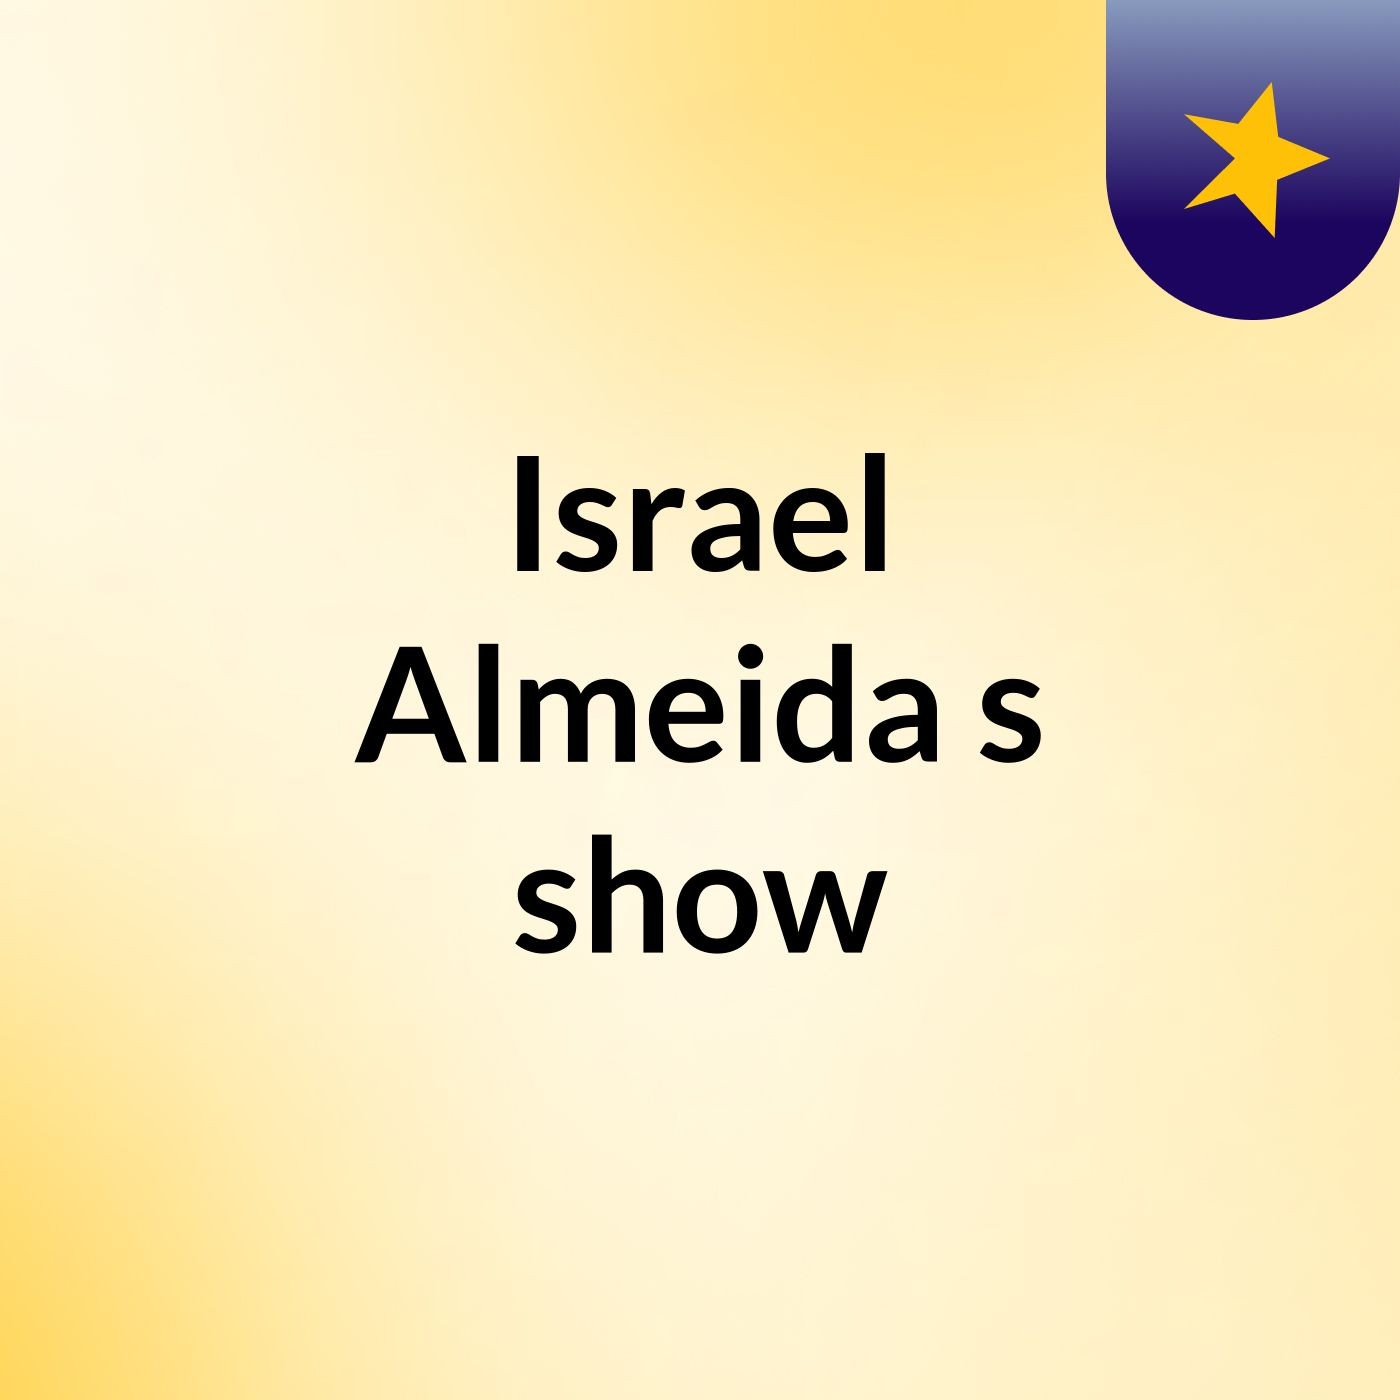 Israel Almeida's show